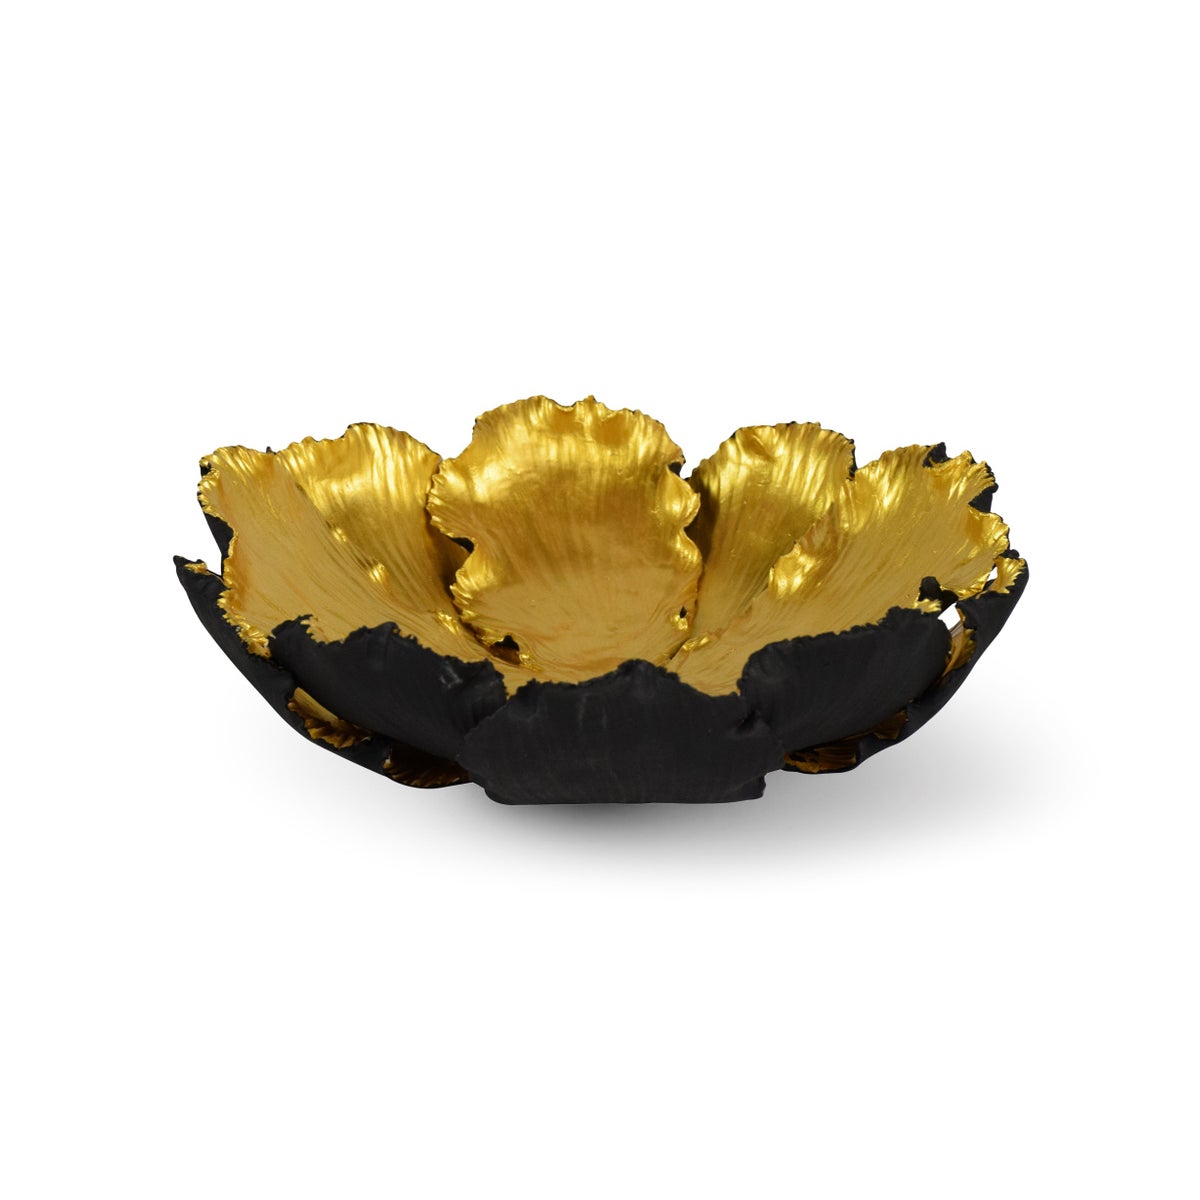 Kuri Bowl - Black & Old Gold